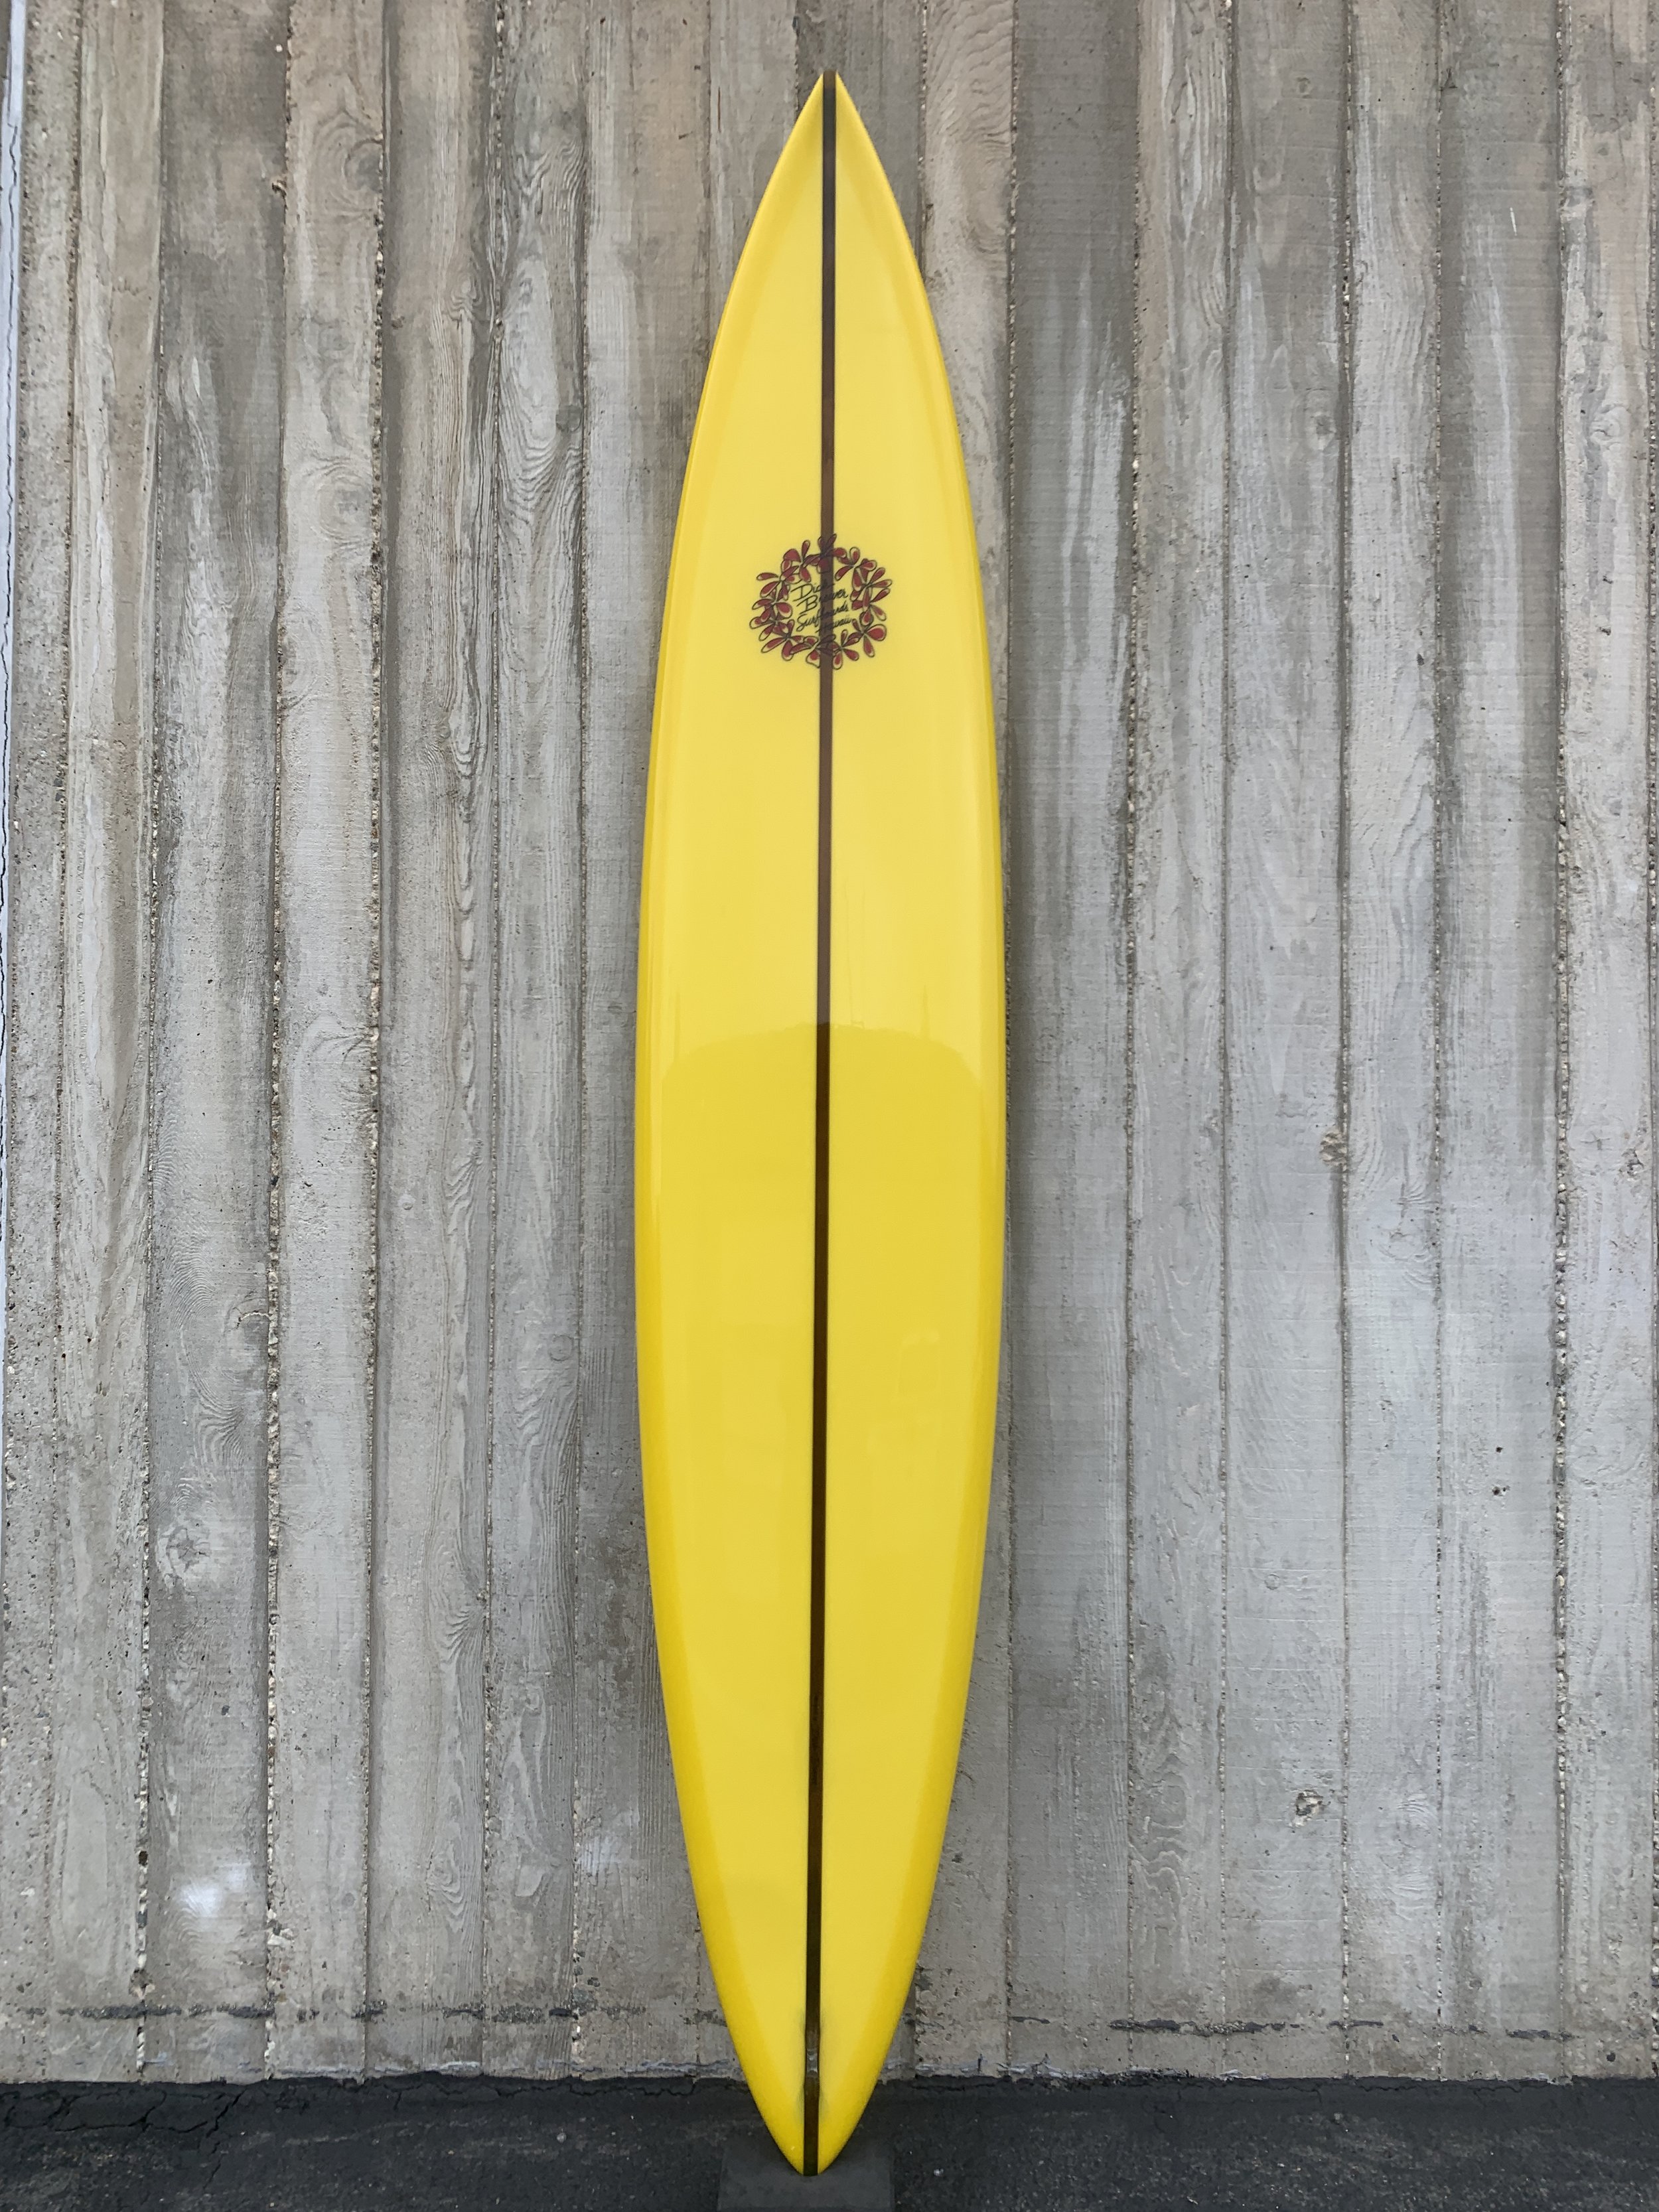 Dick Brewer Surfboards